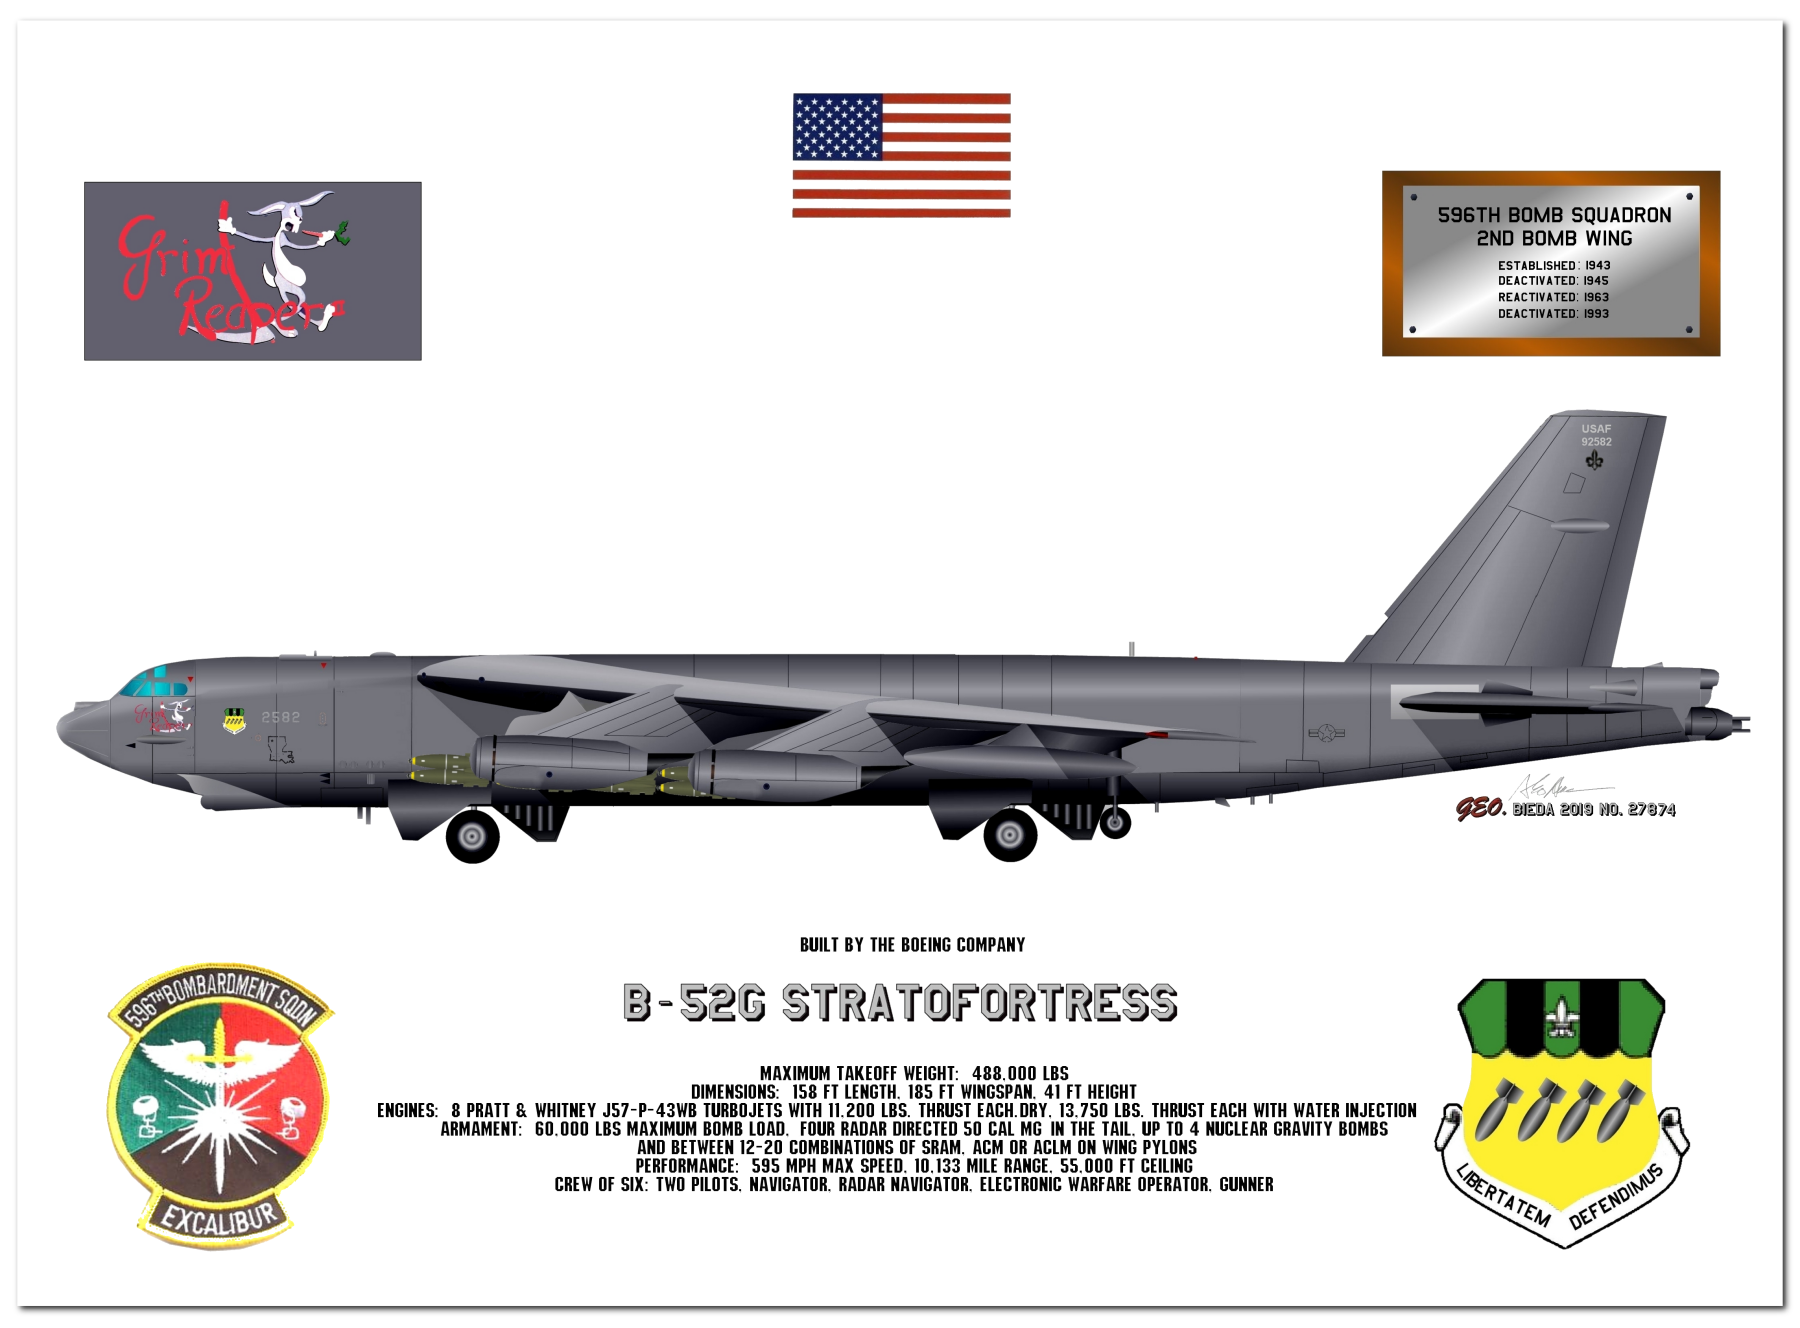 B-52 Stratofortress Profile Drawings by George Bieda